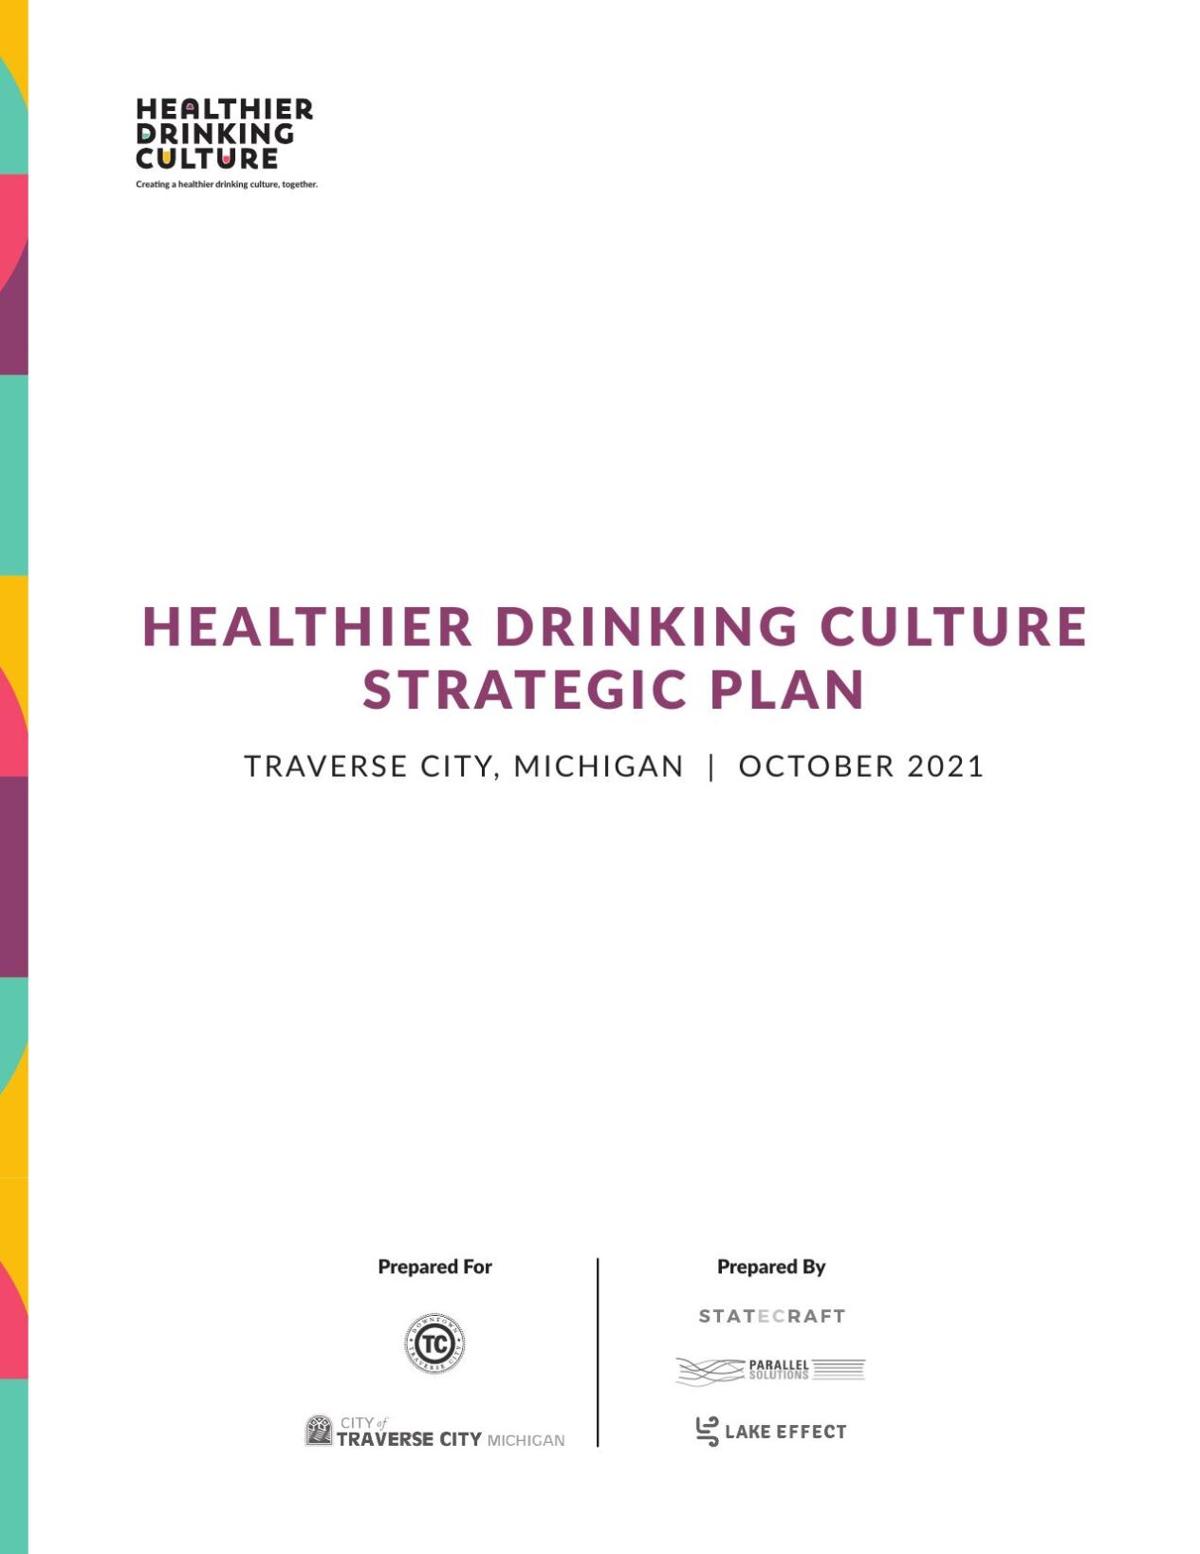 The final Healthier Drinking Culture Strategic Plan